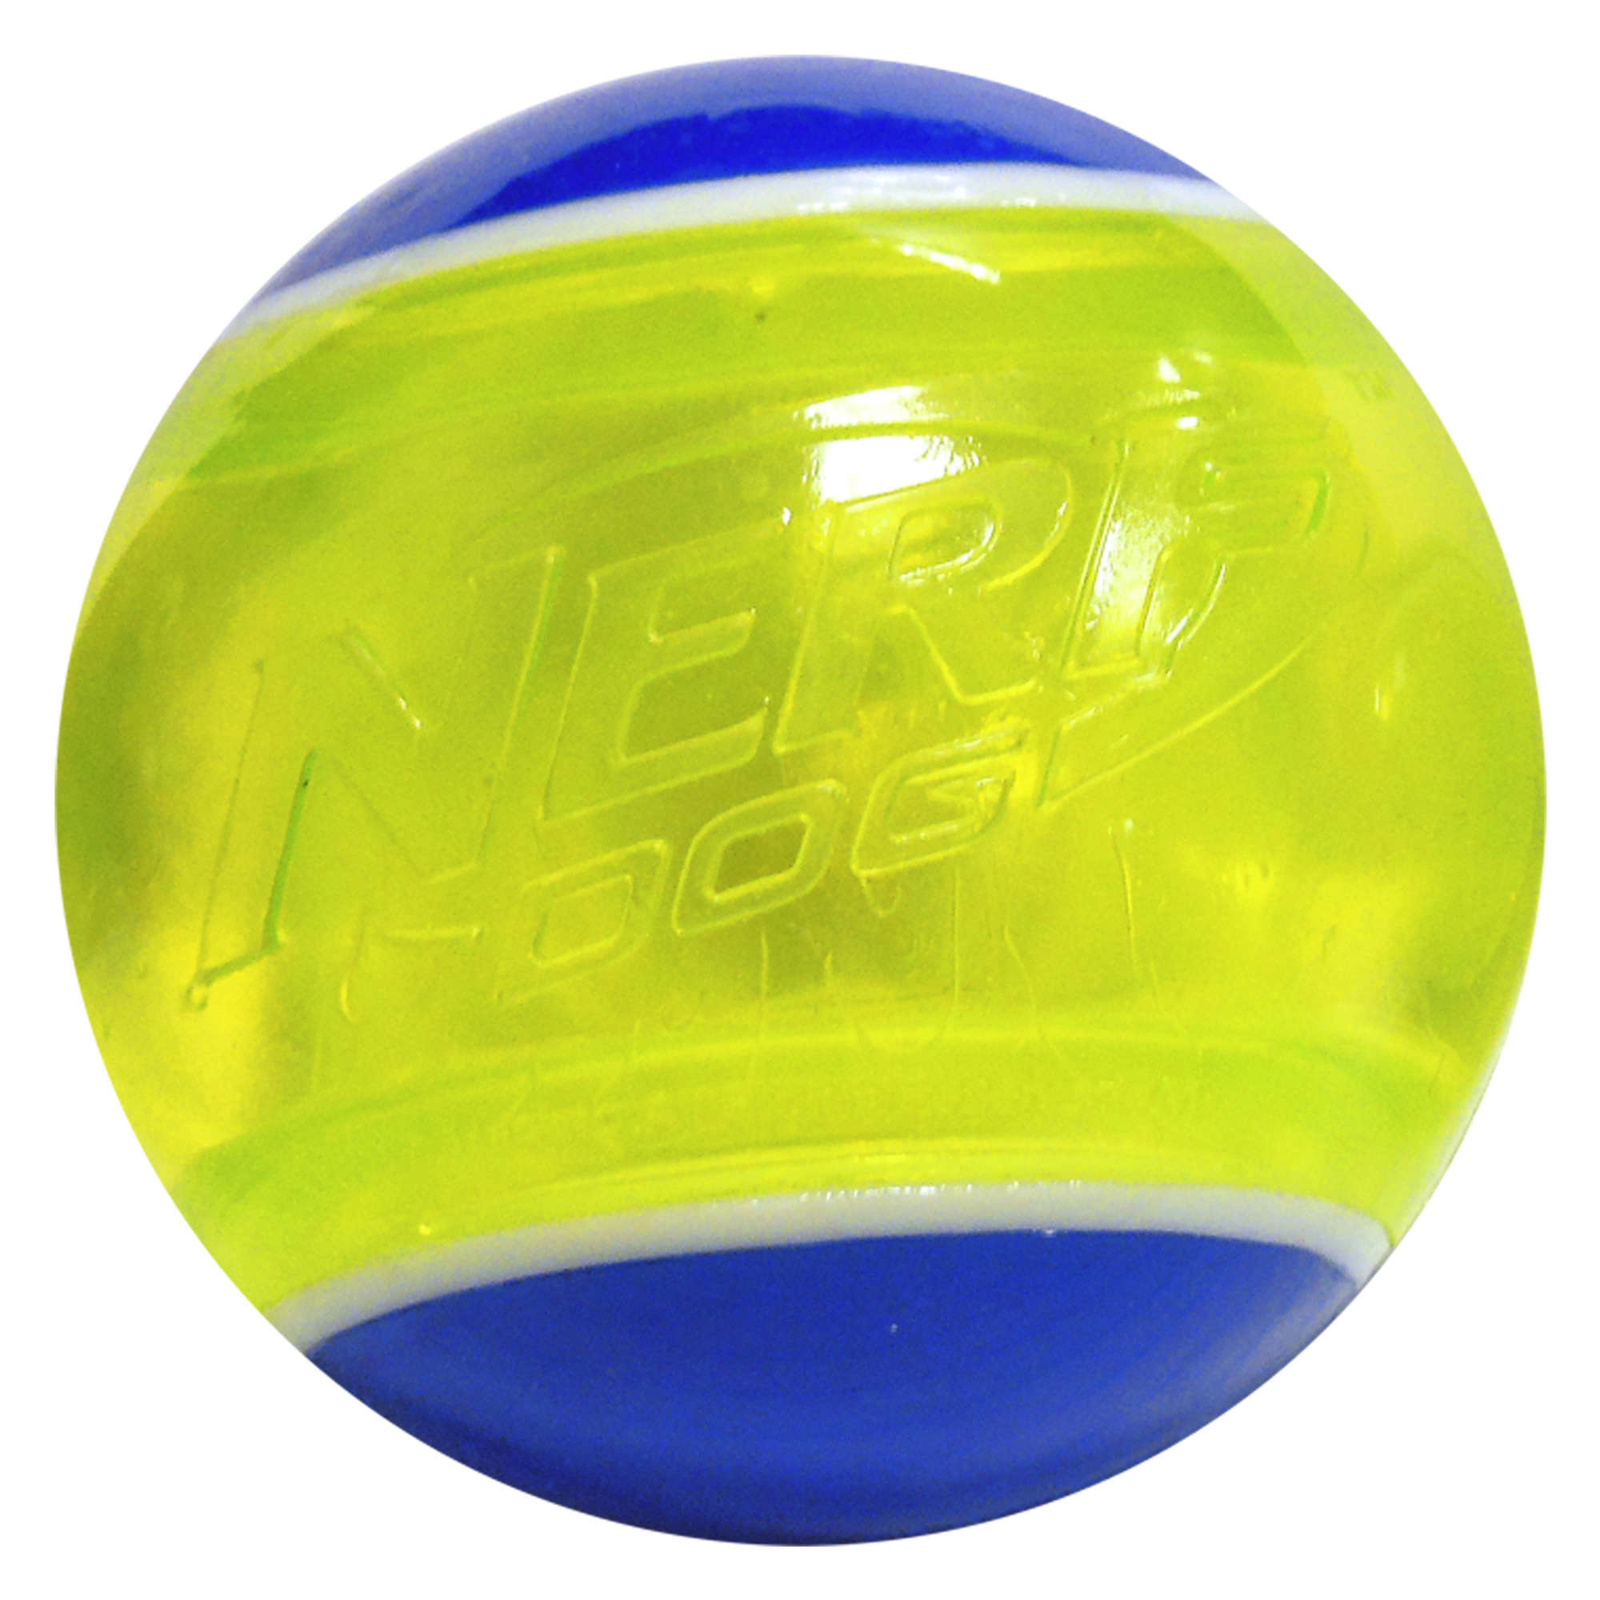 Nerf Nerf мяч светящийся прозрачный , 8 см, (синий/зеленый) (159 г) nerf nerf мяч светящийся прозрачный 8 см синий зеленый 159 г